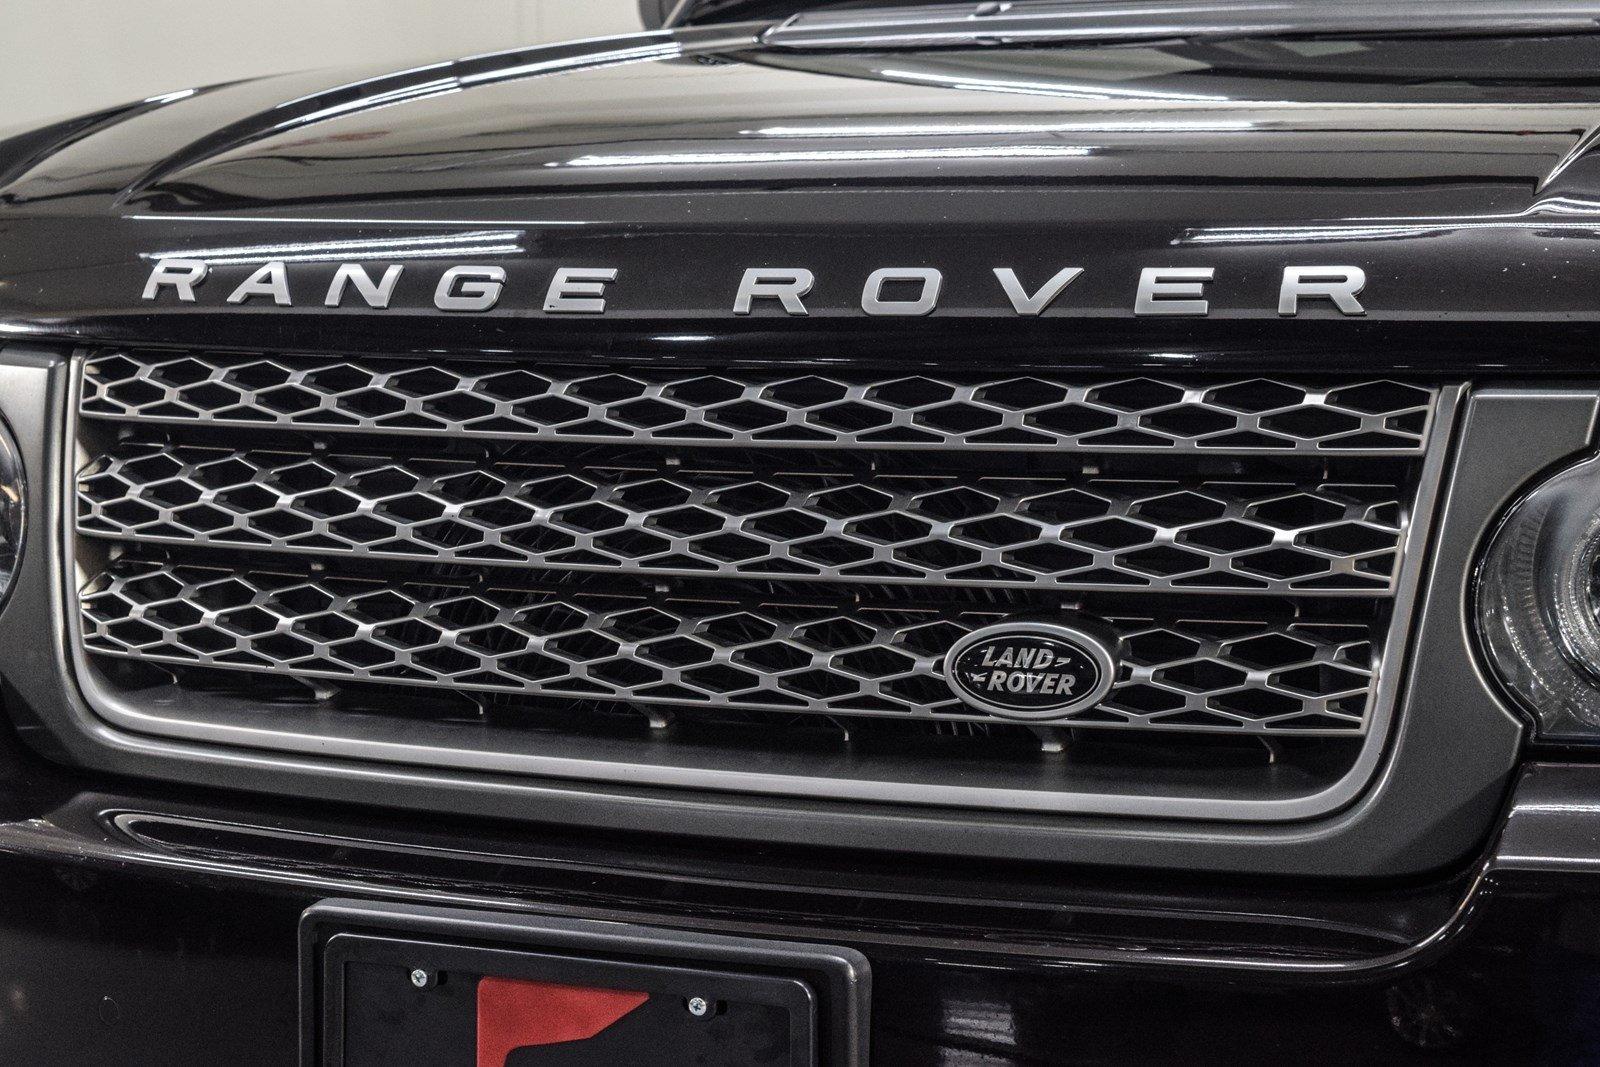 Used 2010 Land Rover Range Rover HSE LUX for sale Sold at Gravity Autos Marietta in Marietta GA 30060 8